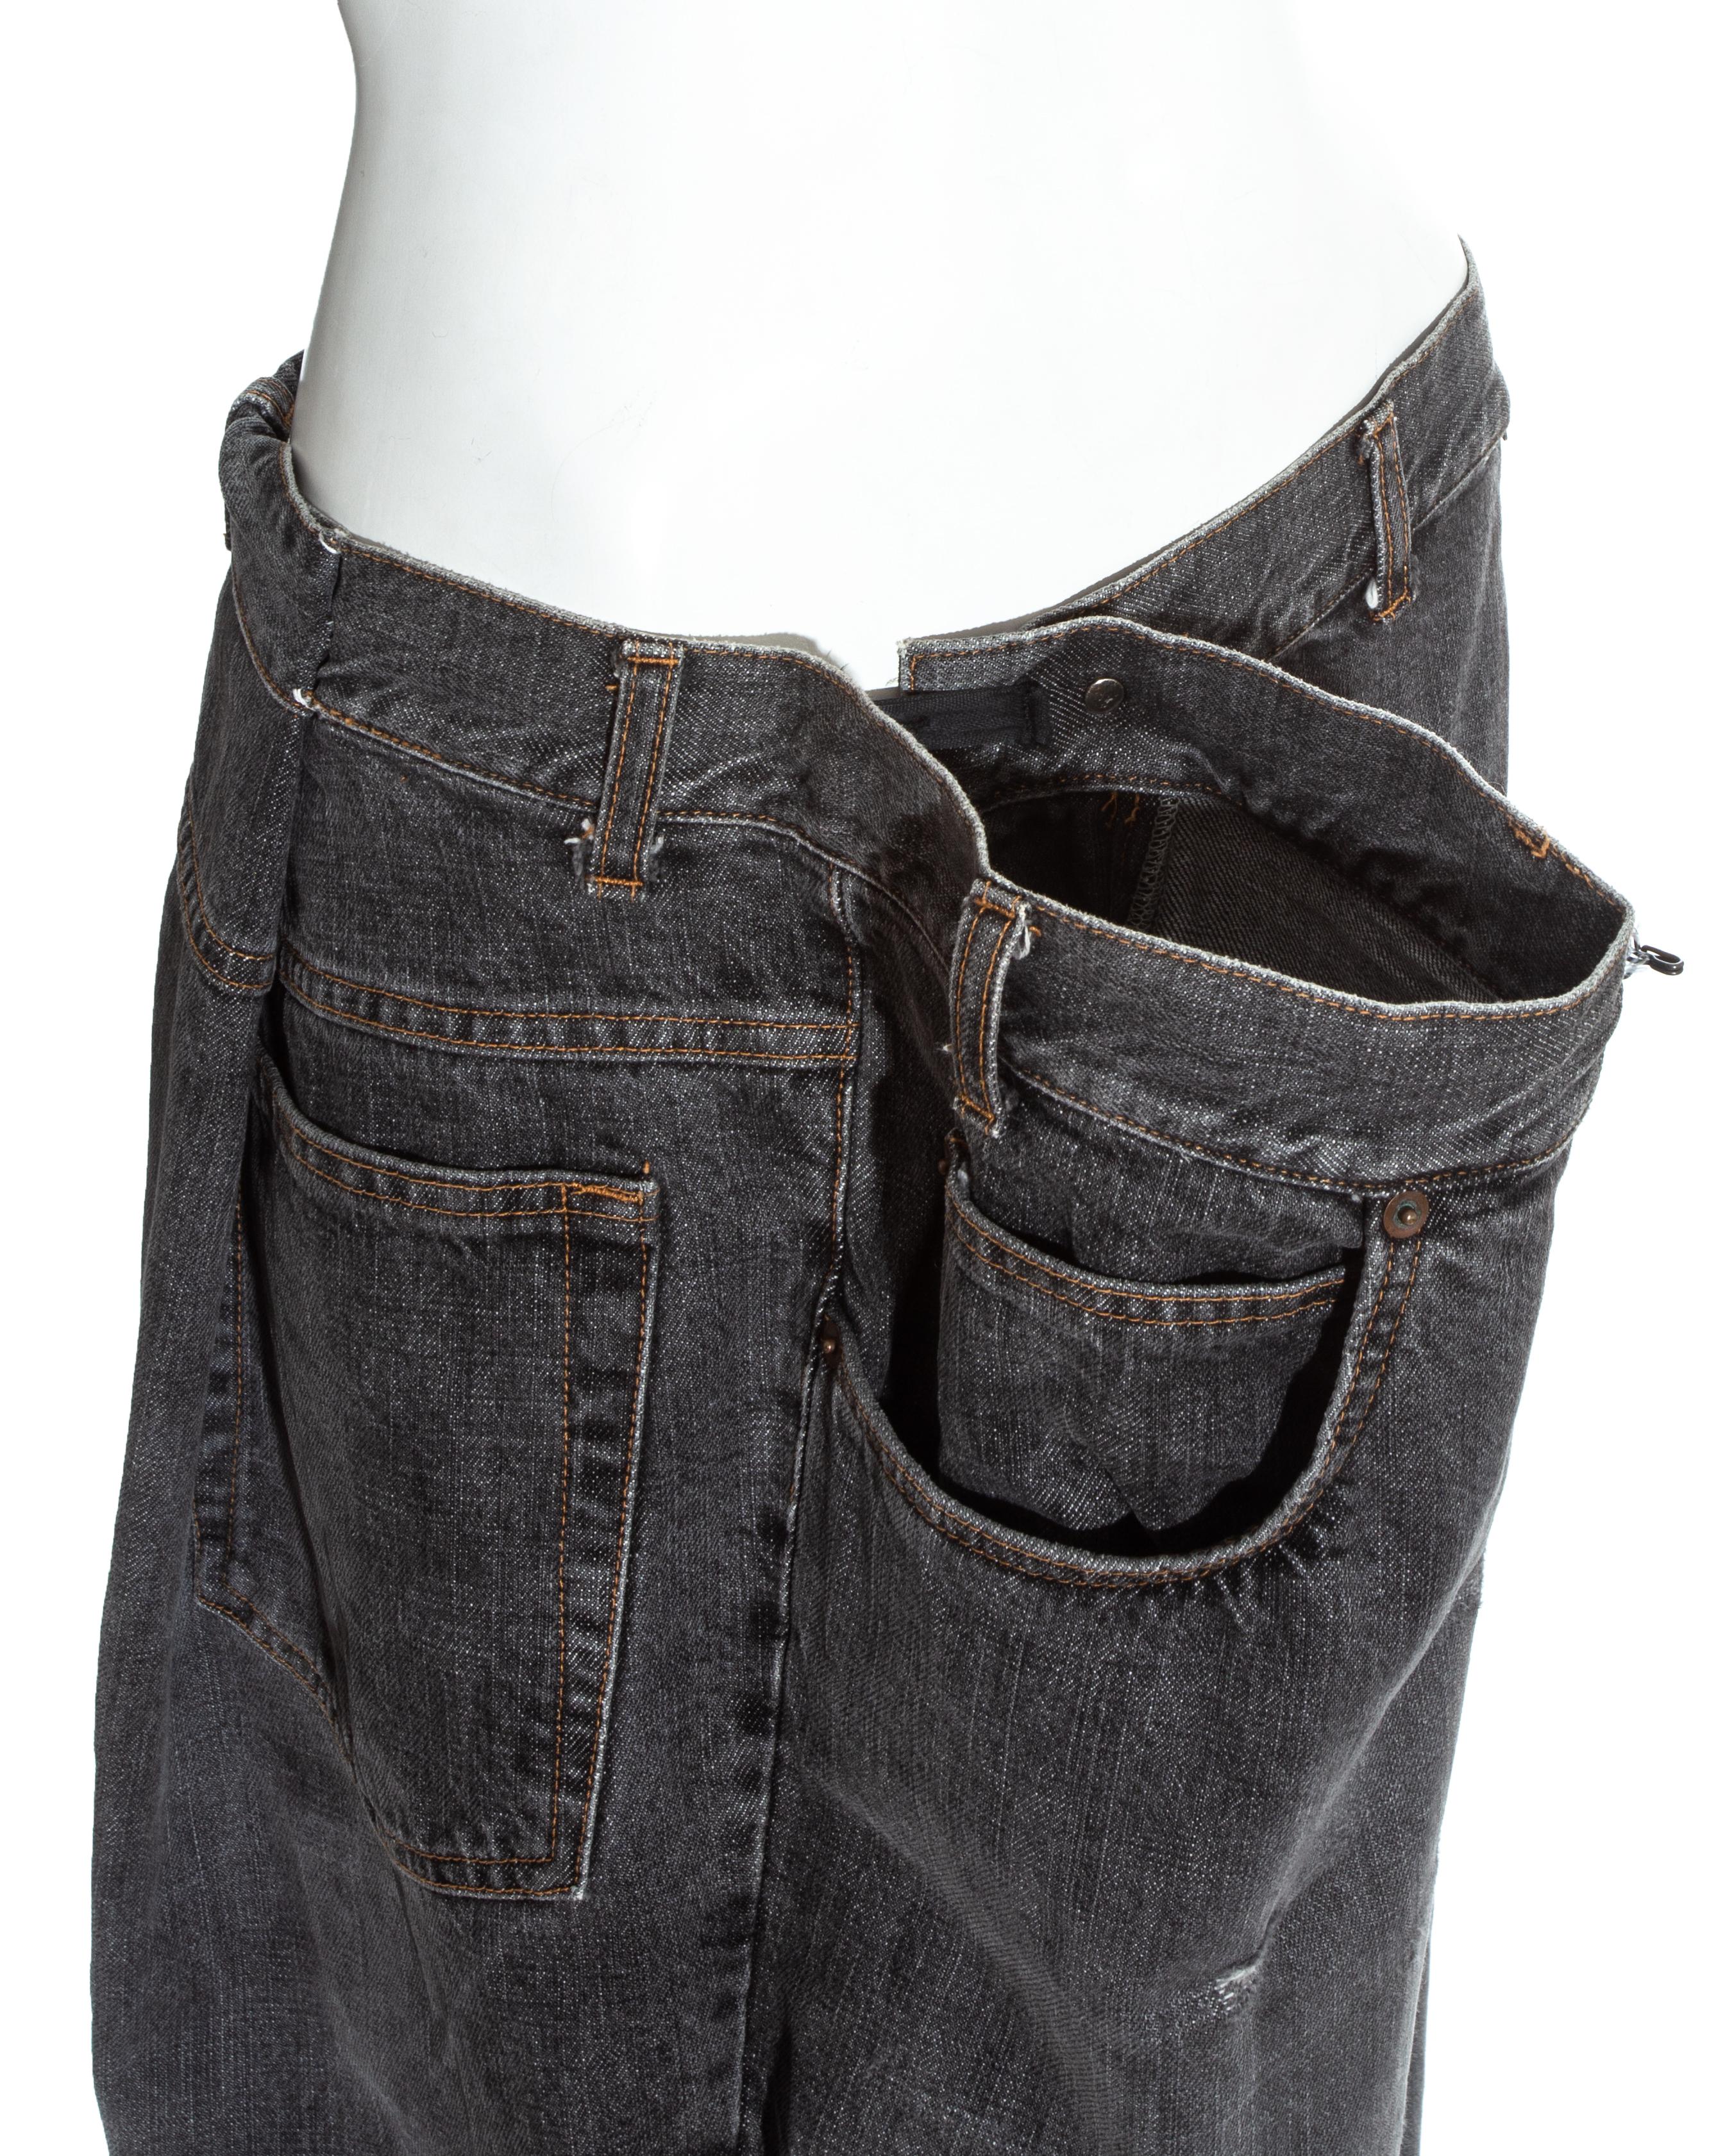 Margiela grey denim oversized size 78 jeans, fw 2000 For Sale 1